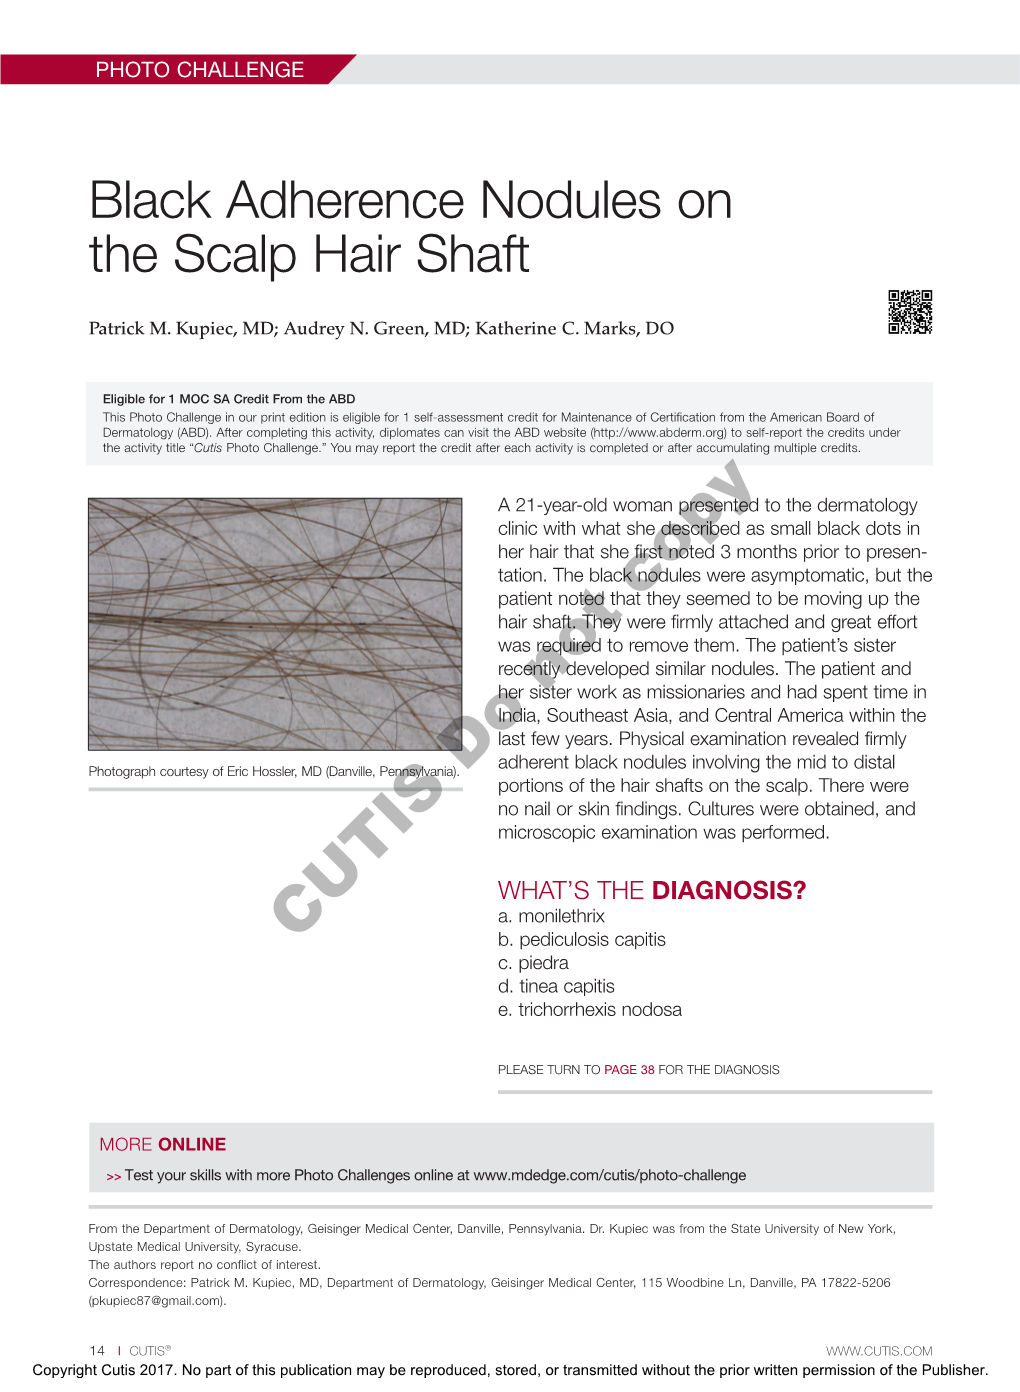 Black Adherence Nodules on the Scalp Hair Shaft